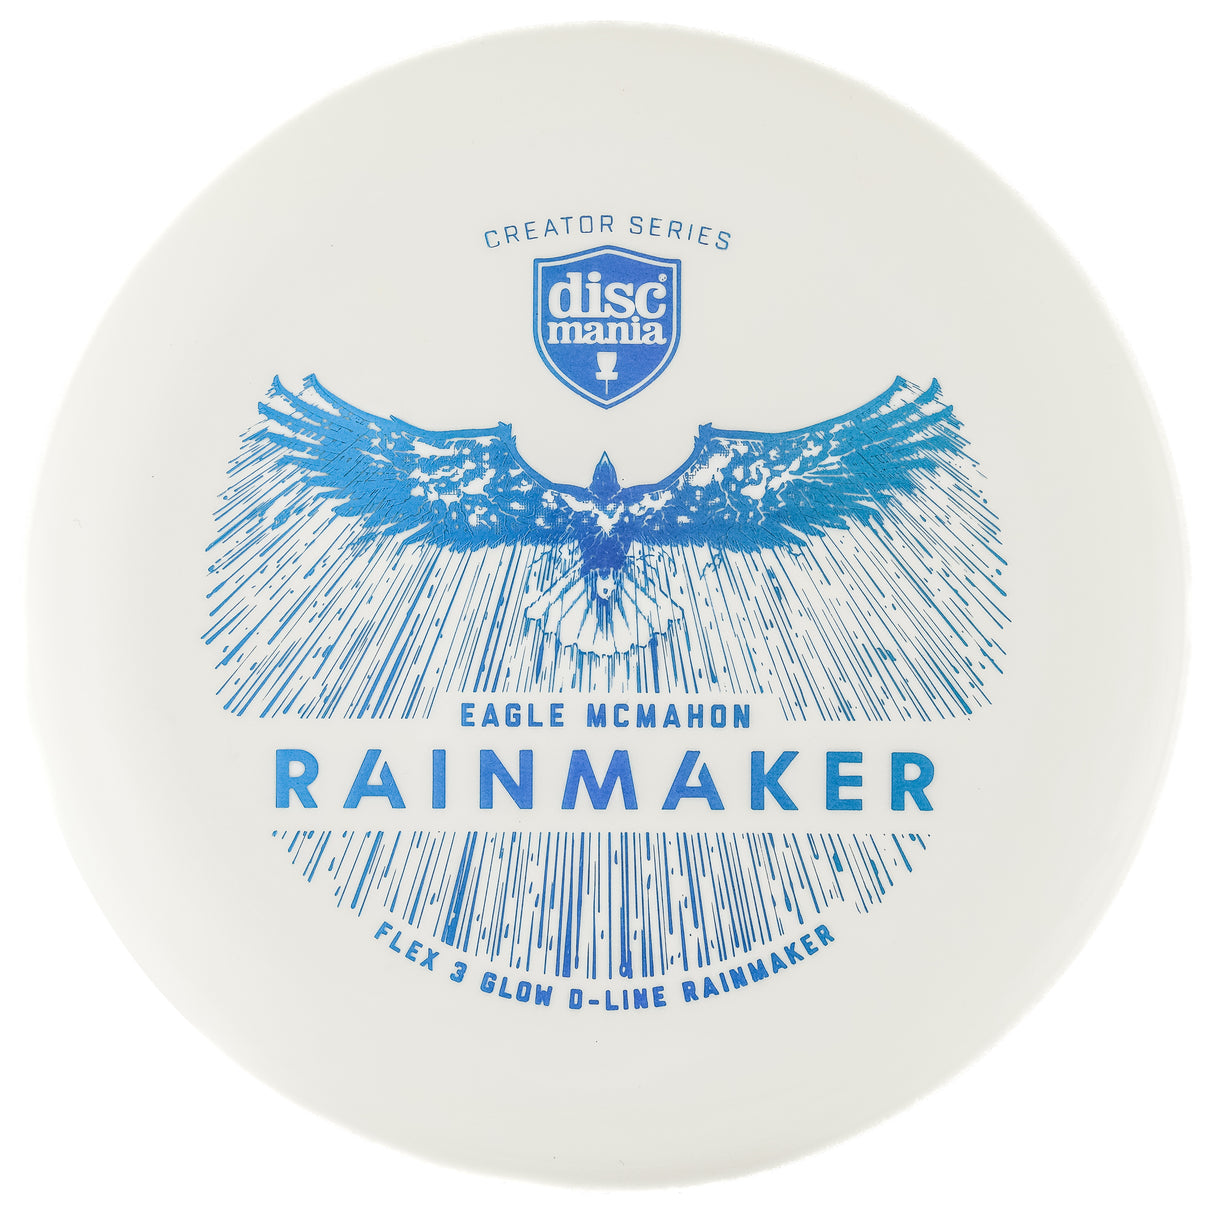 Discmania Rainmaker - Flex 3 Glow D-Line 175g | Style 0003